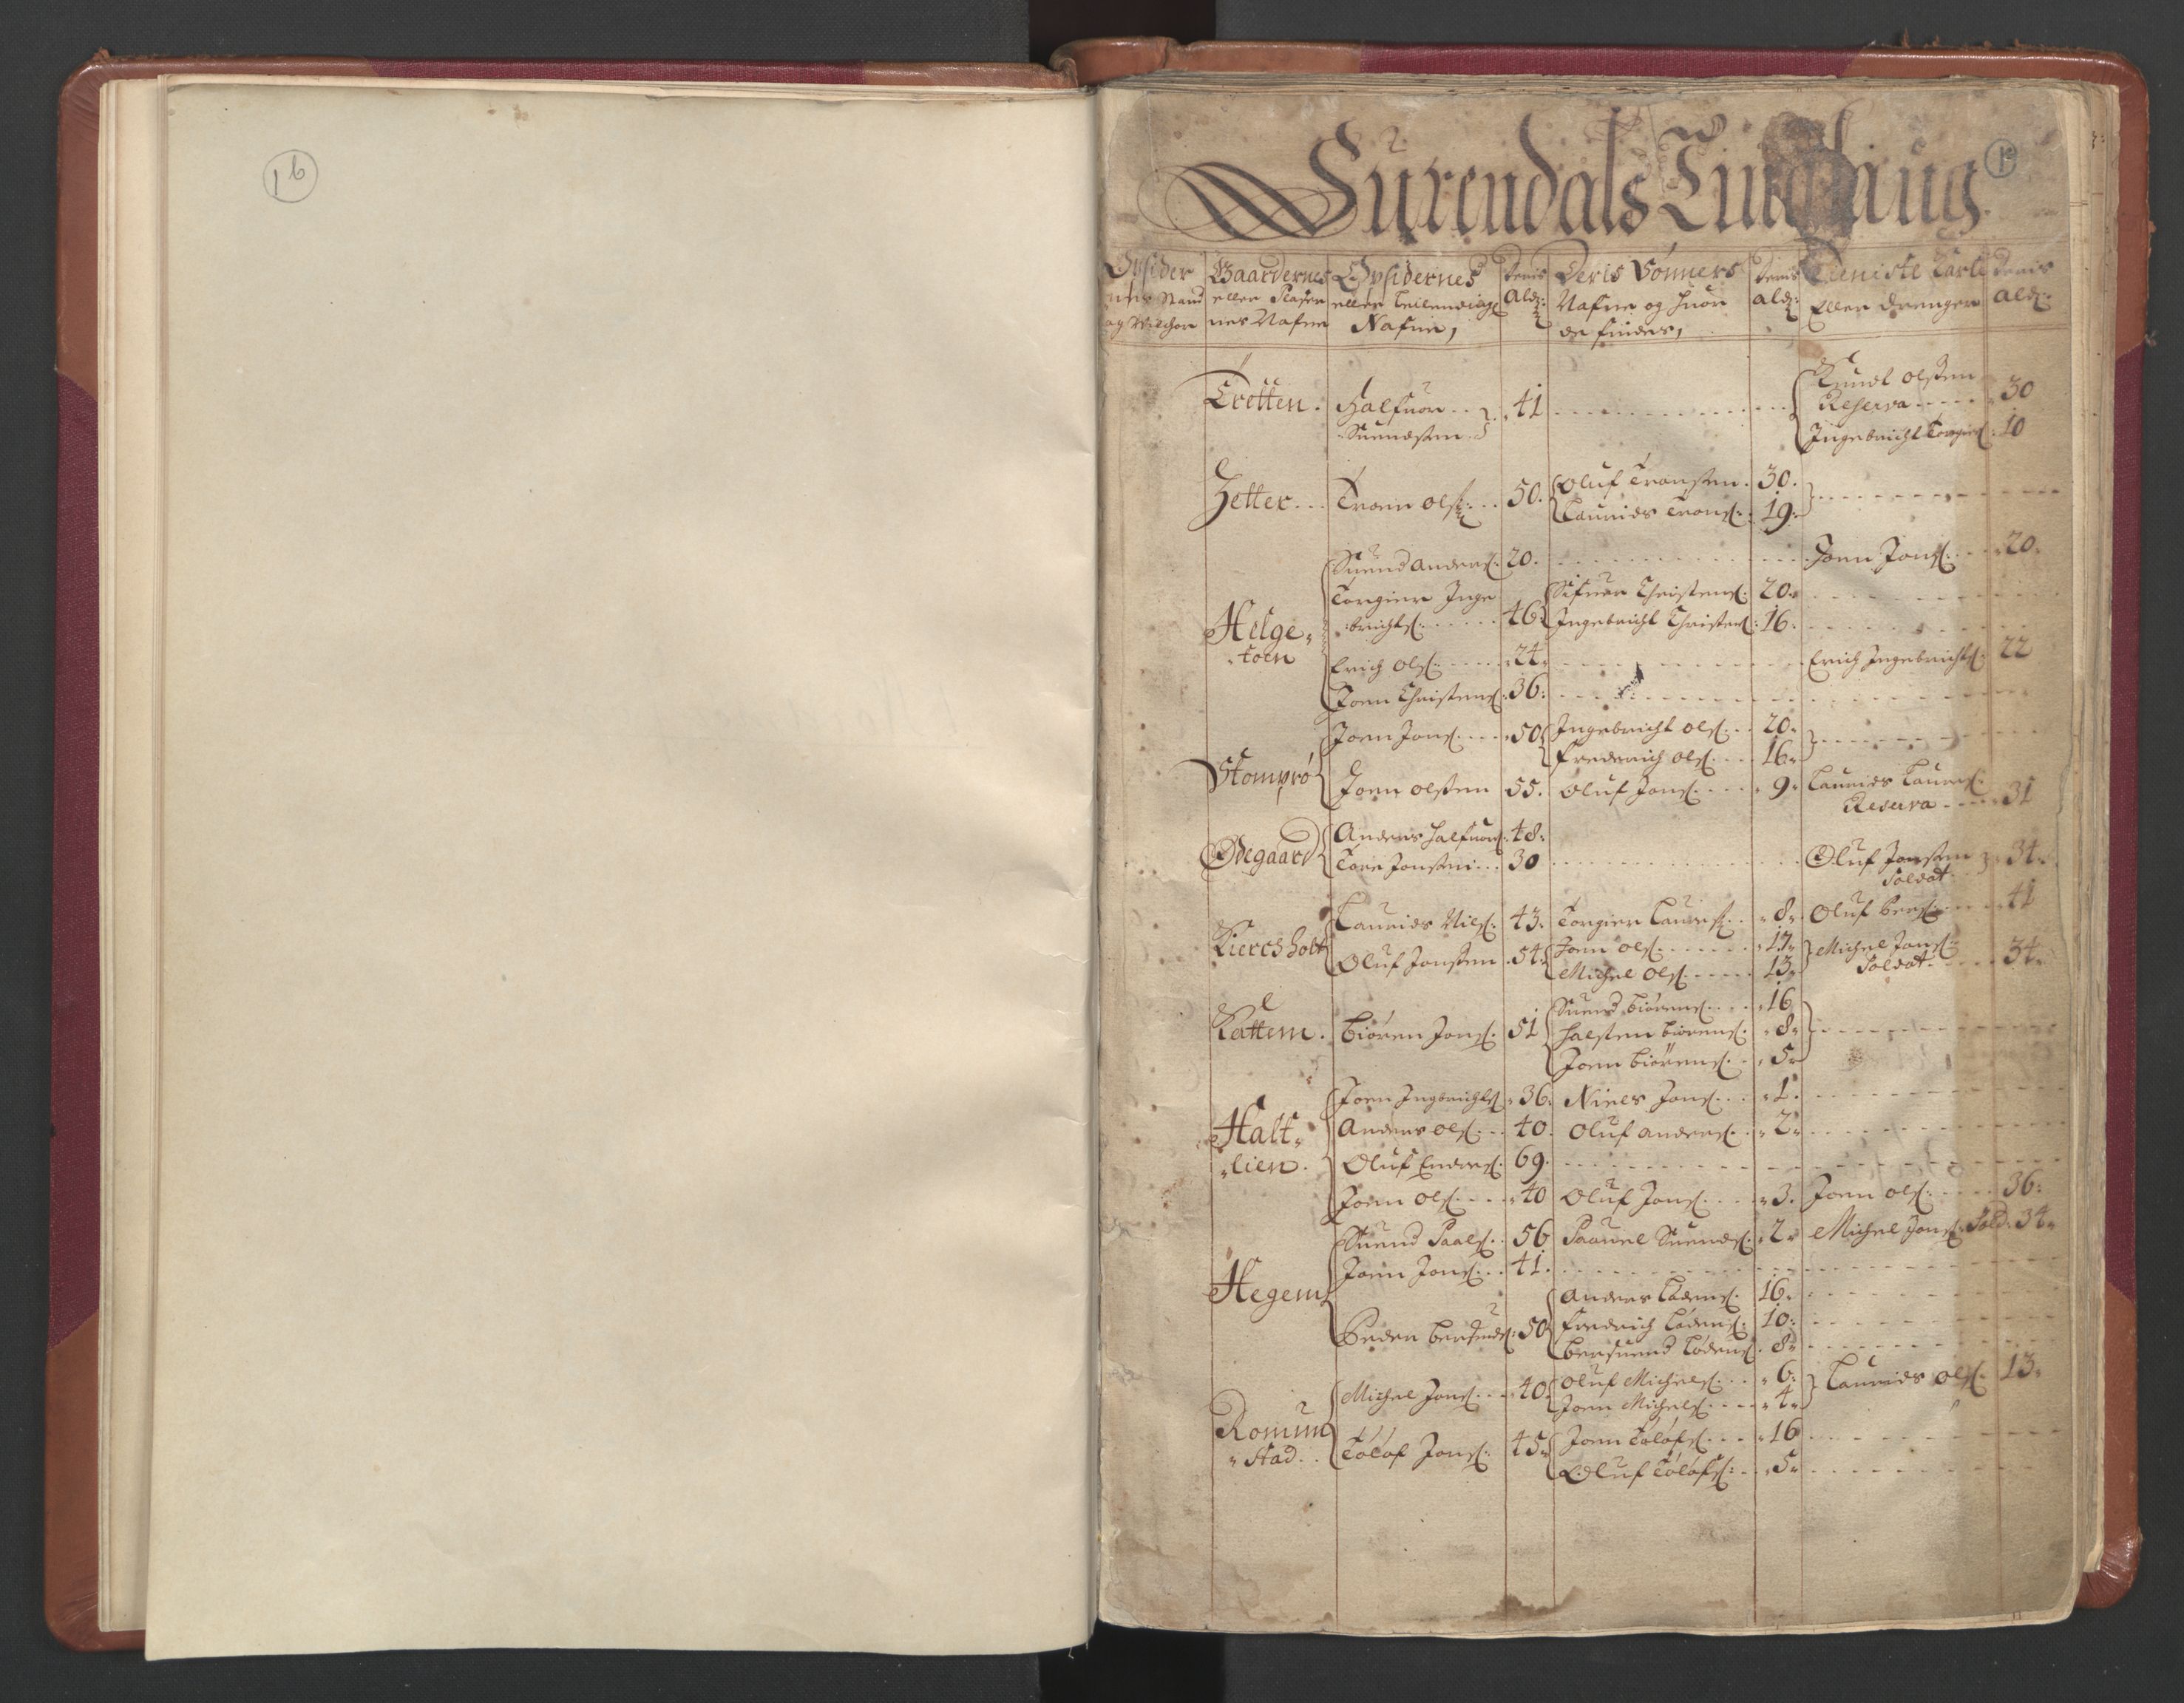 RA, Census (manntall) 1701, no. 11: Nordmøre fogderi and Romsdal fogderi, 1701, p. 1b-1c